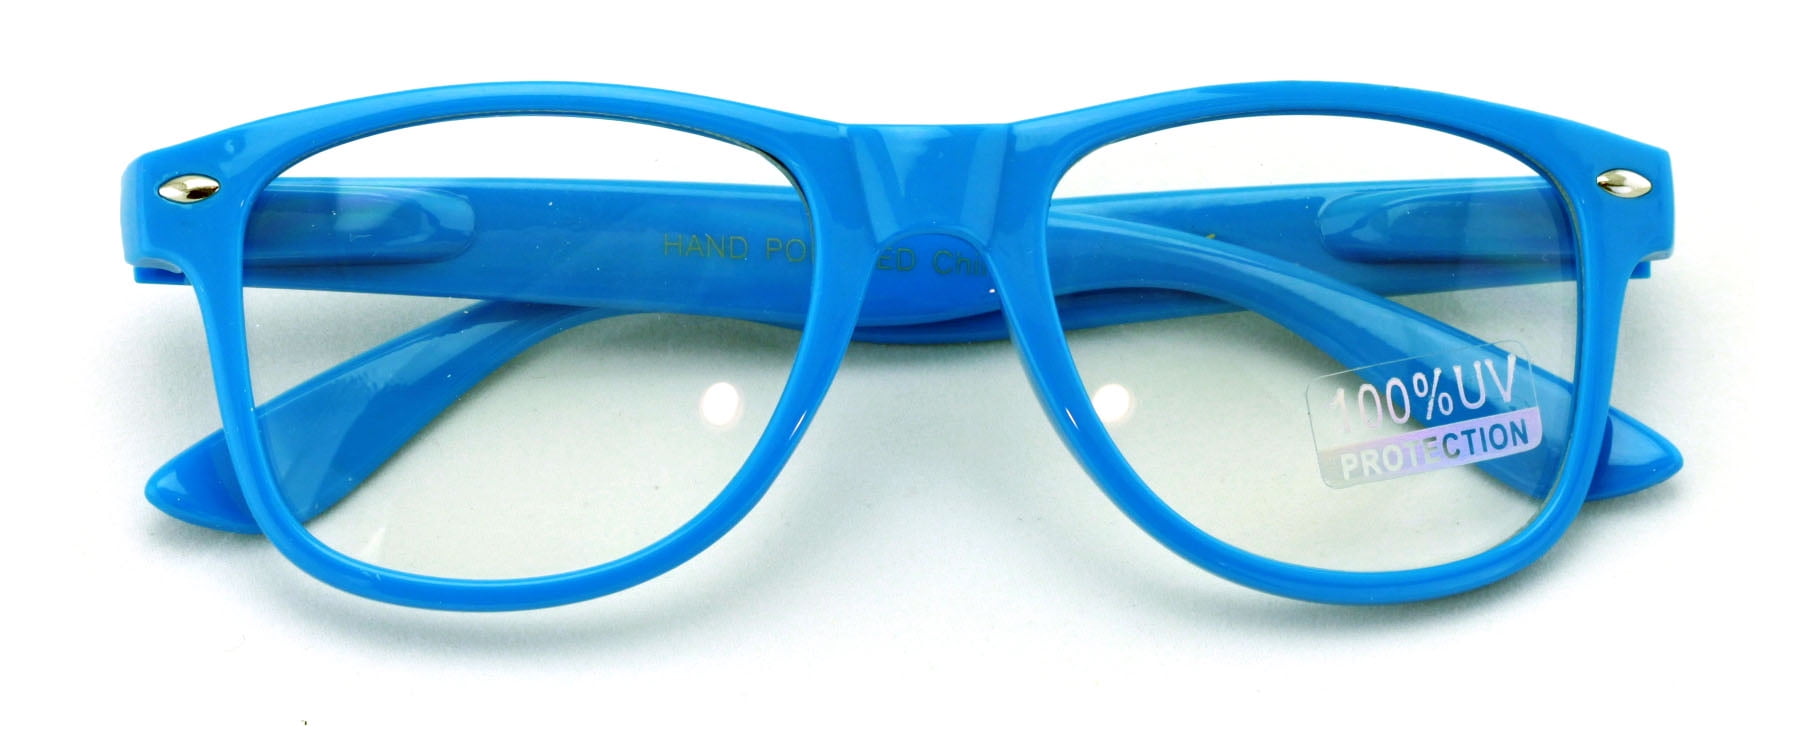 Geek Fake Nerd Eyeglasses for Costume COASION Kids Clear Glasses for Little Girls Boys Age 4-12 